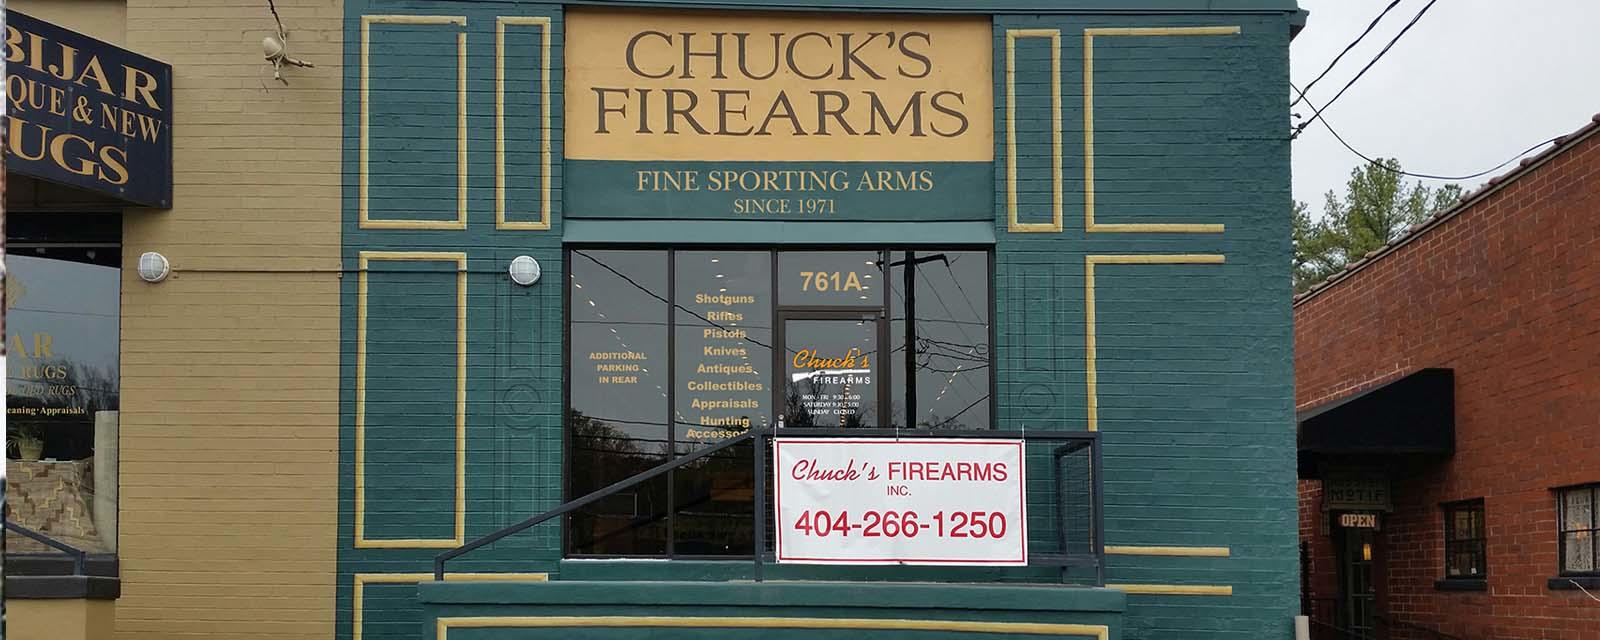 Chuck's Firearms Photo